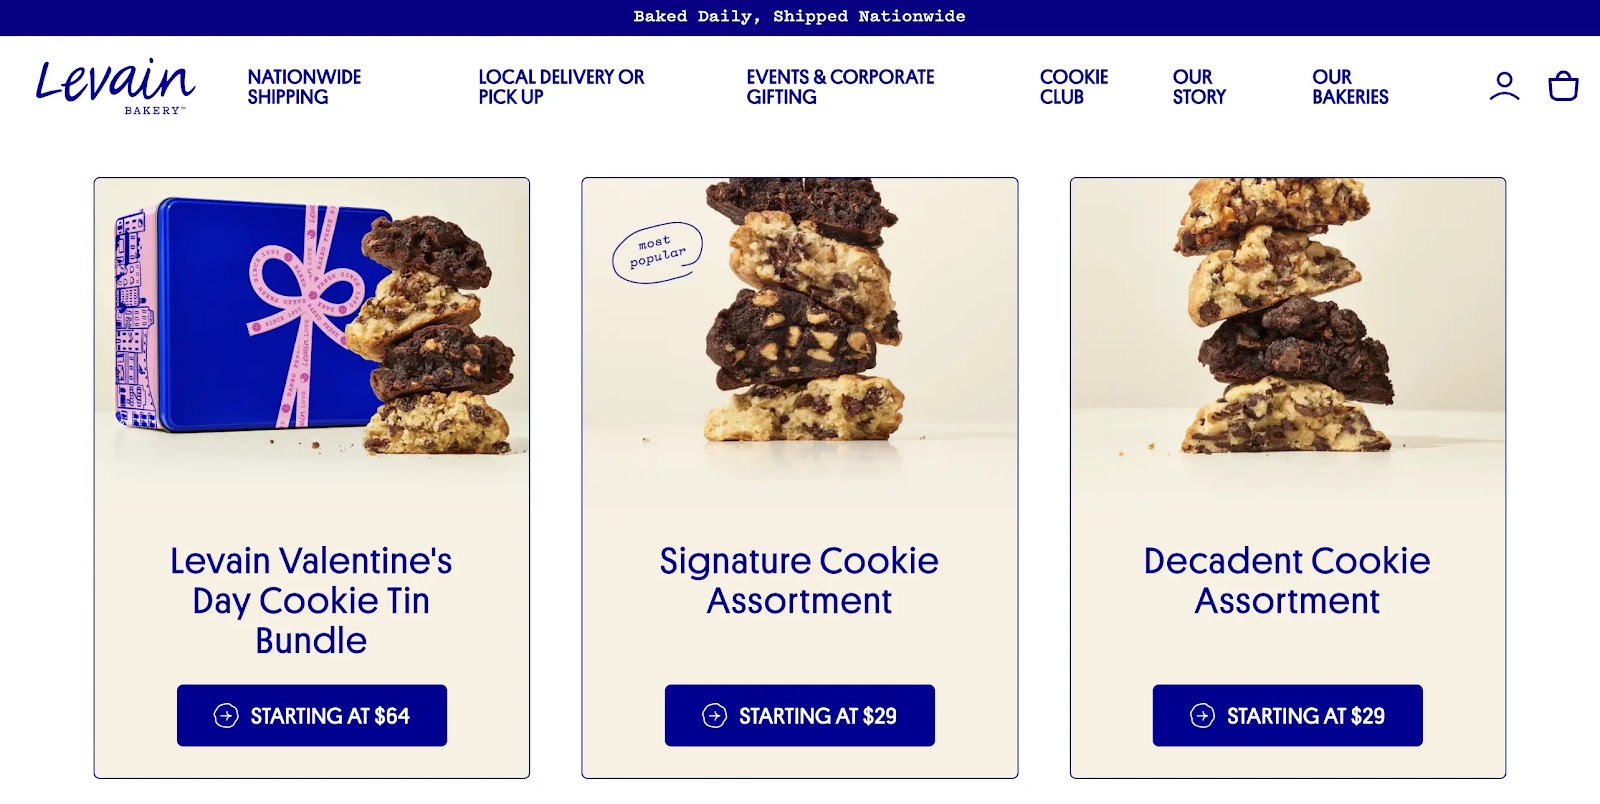 Levain Bakery's cookie bundles offers